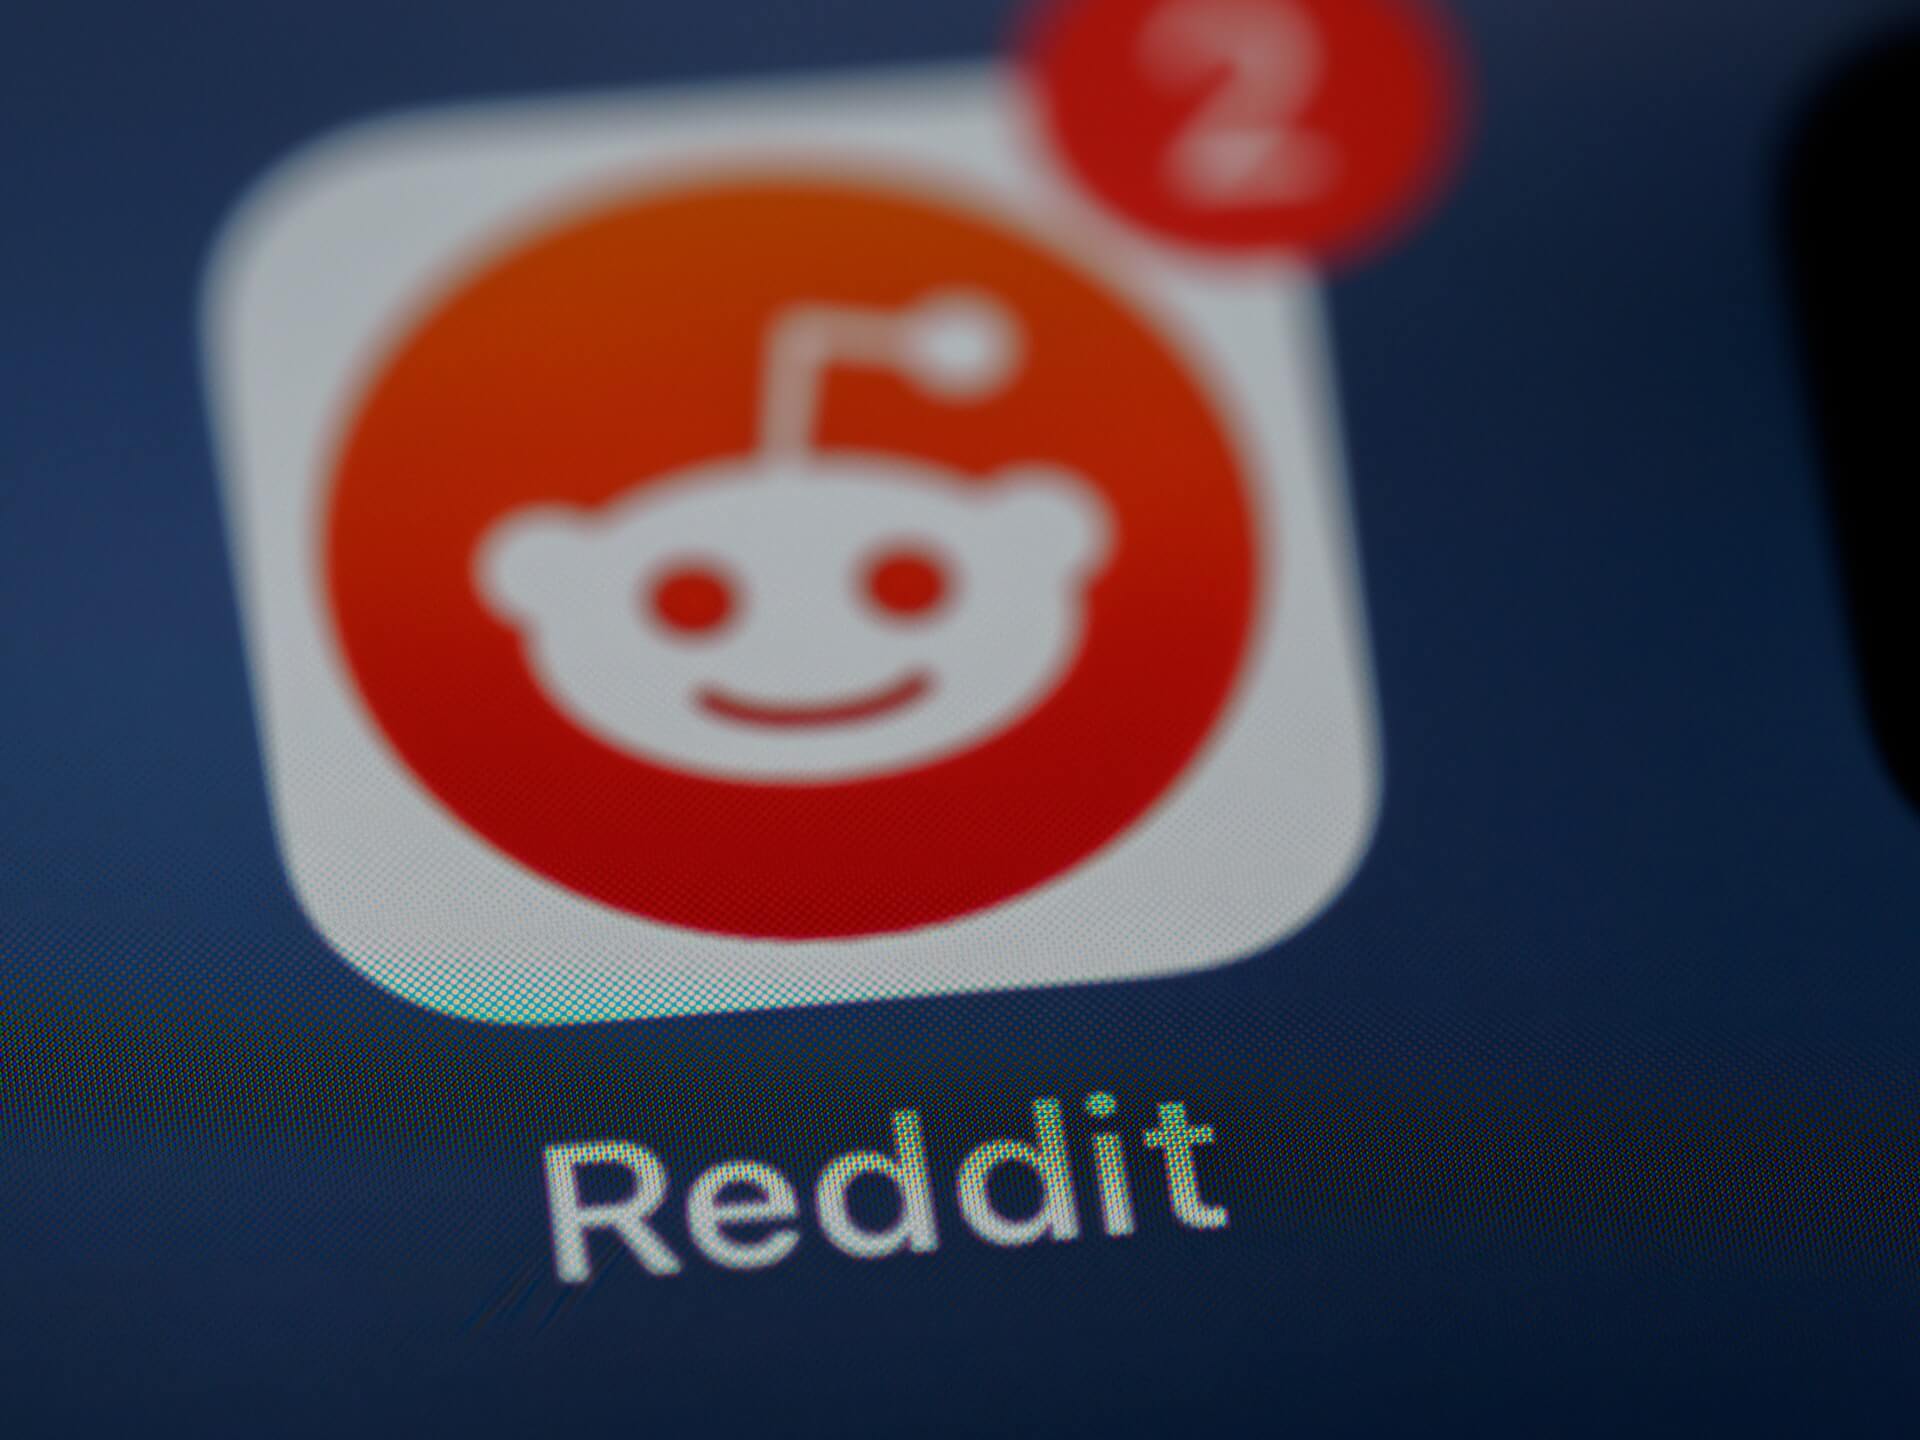 Reddit app icon on smartphone